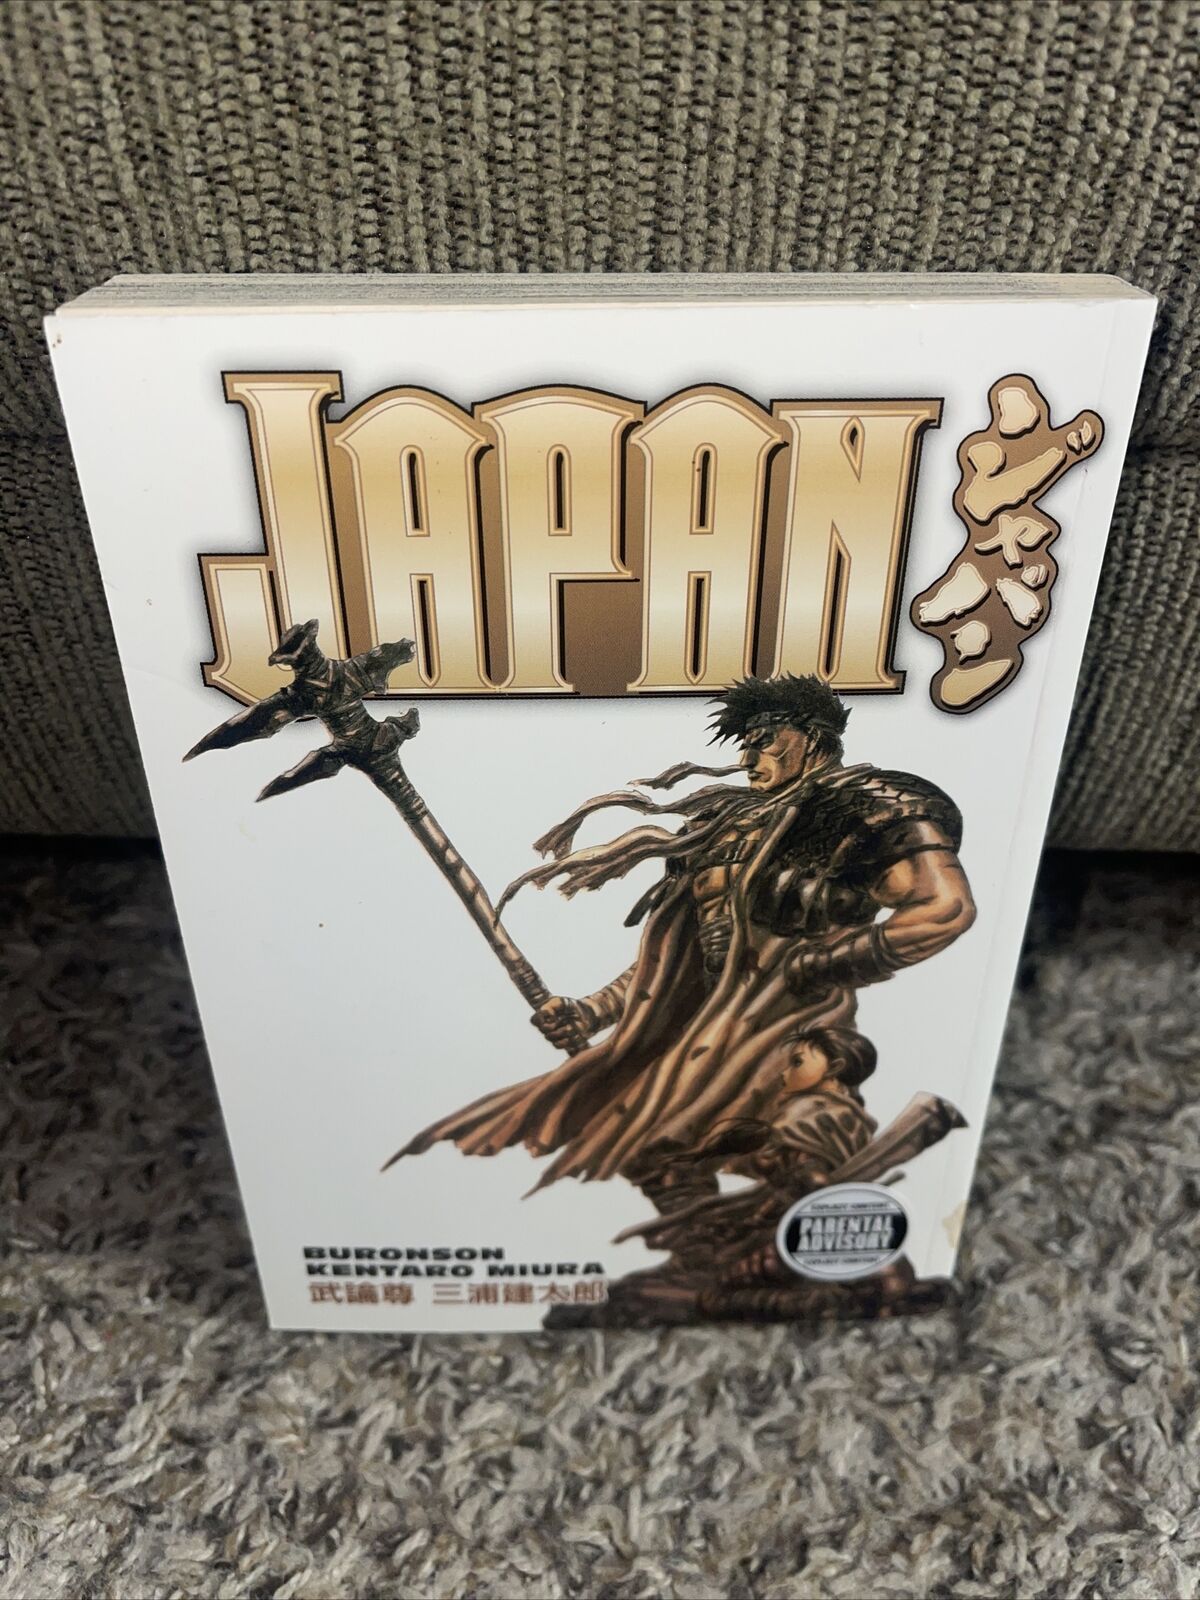 Japan Manga by Buronson & Kentaro Miura Dark Horse Comics Rare OOP First Edition